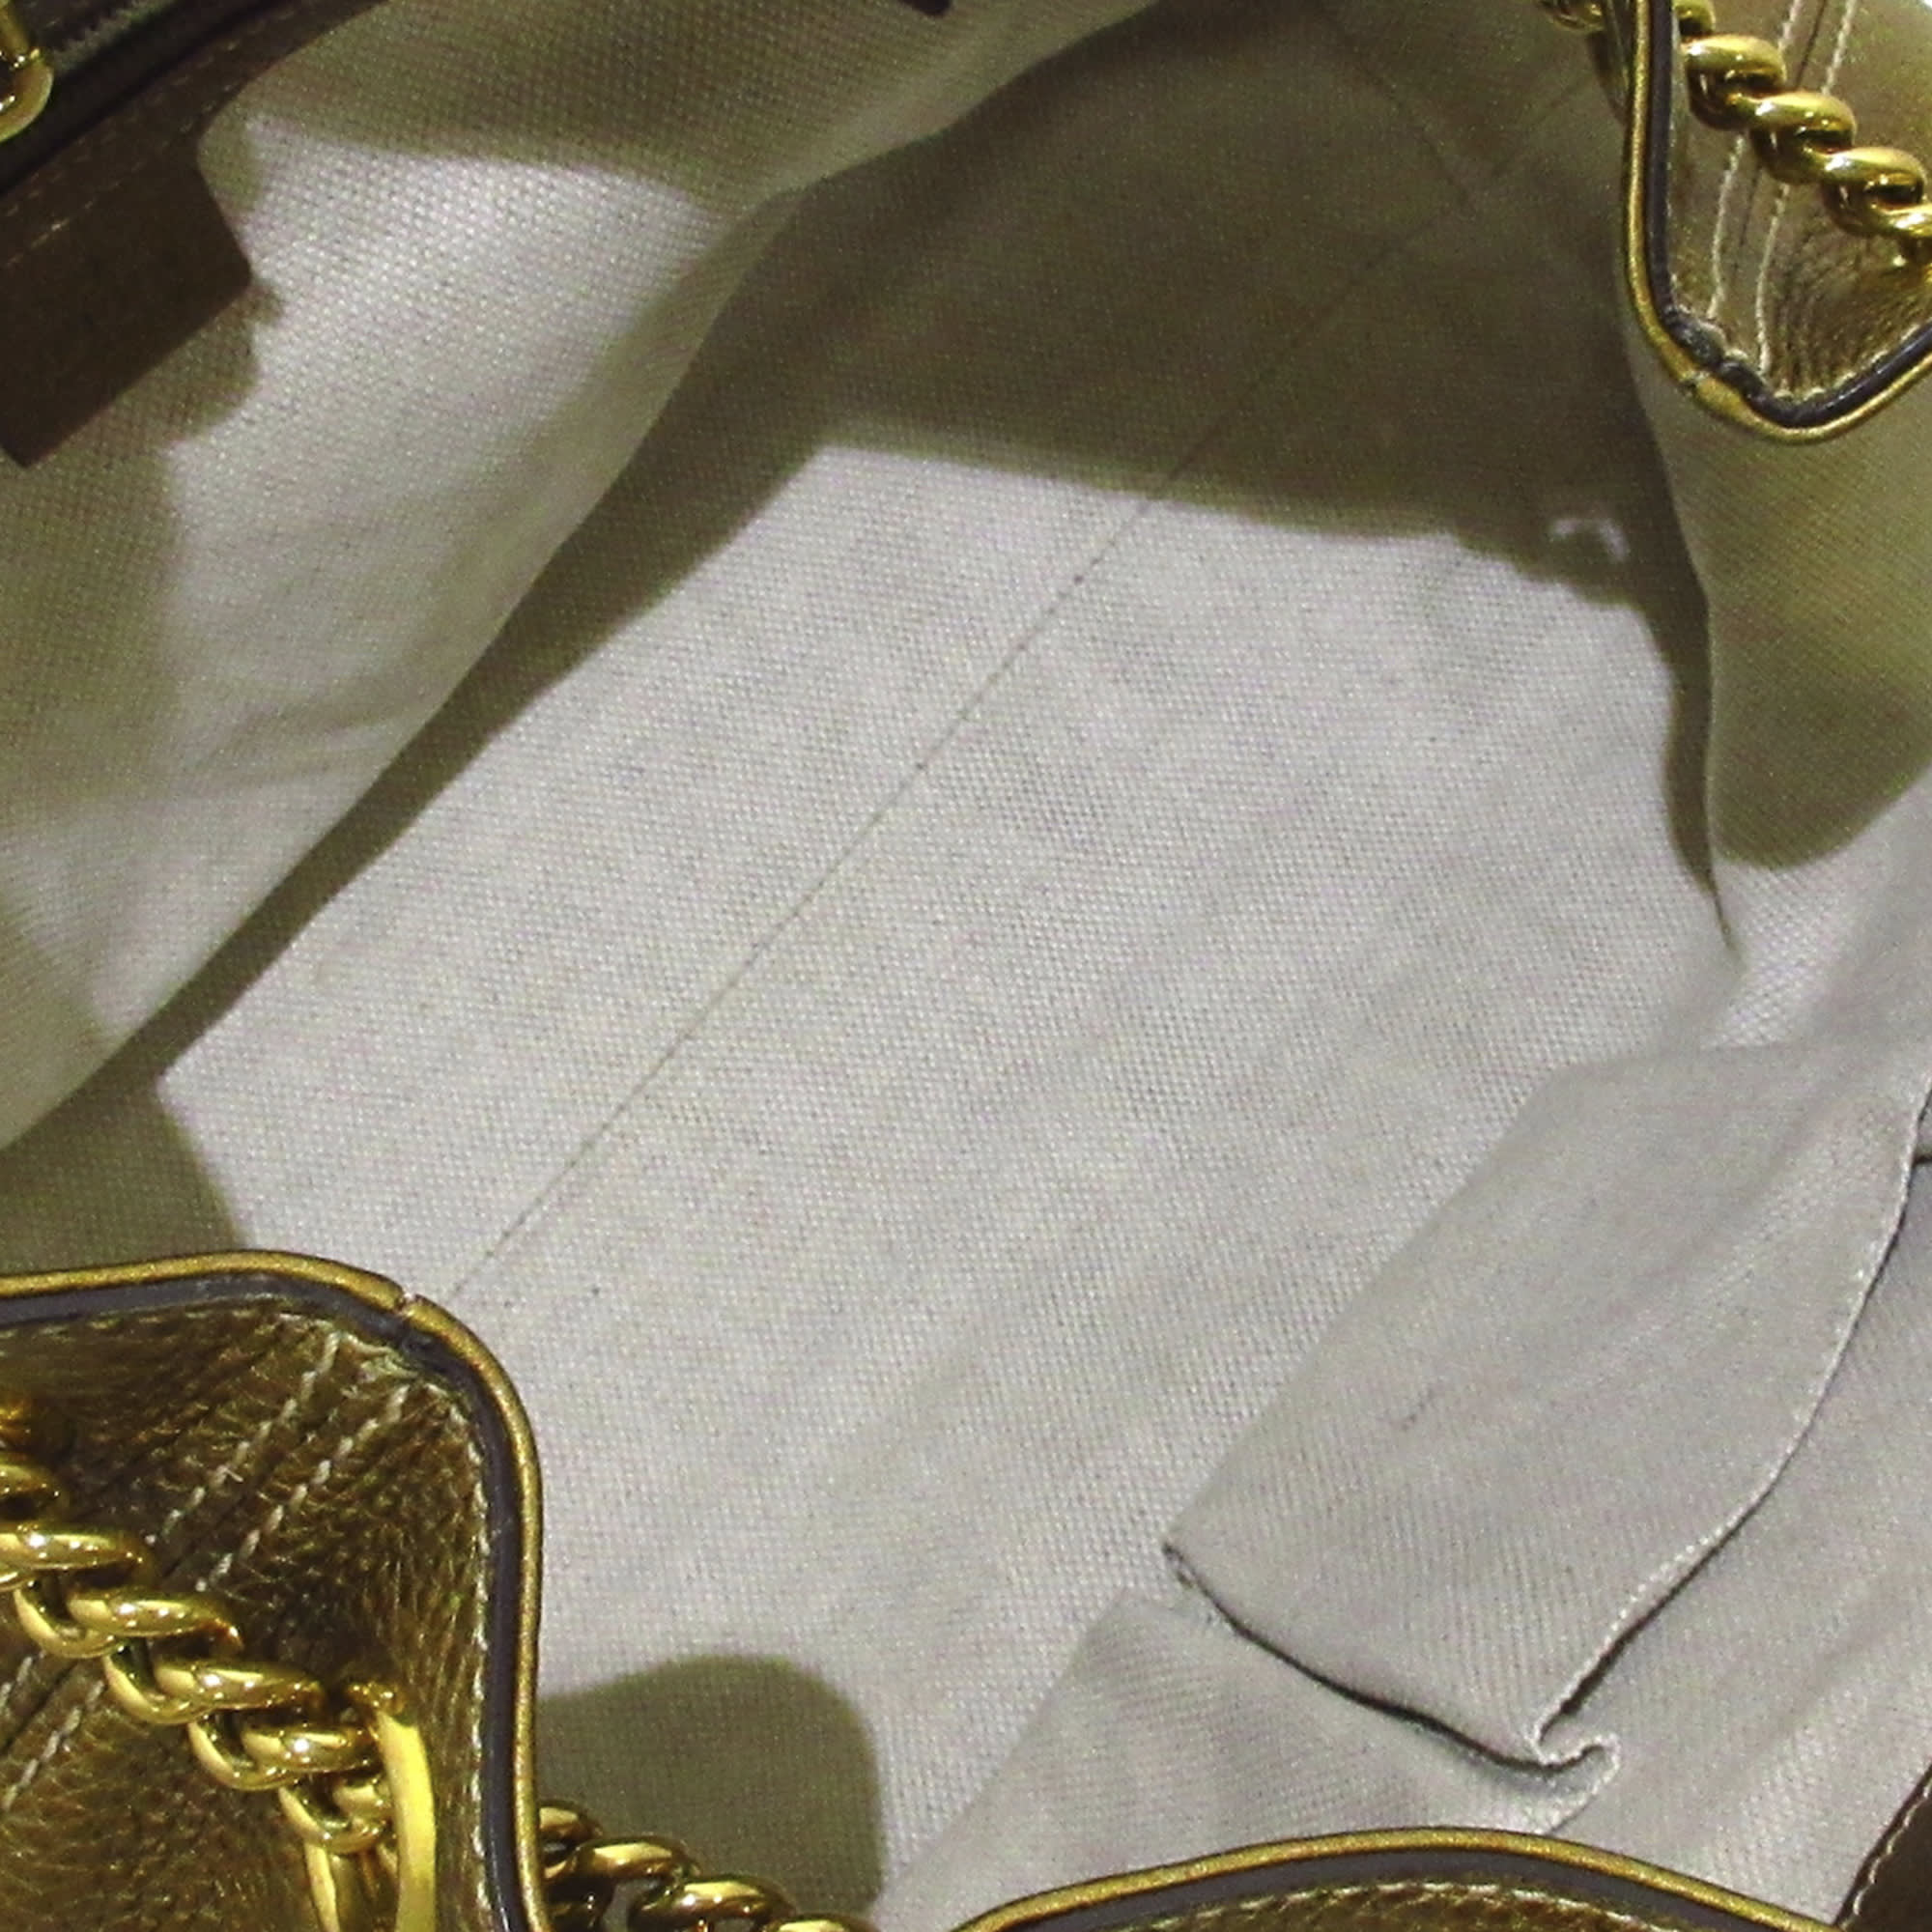 Gucci Soho Chain Tote Bag, ONESIZE, khaki